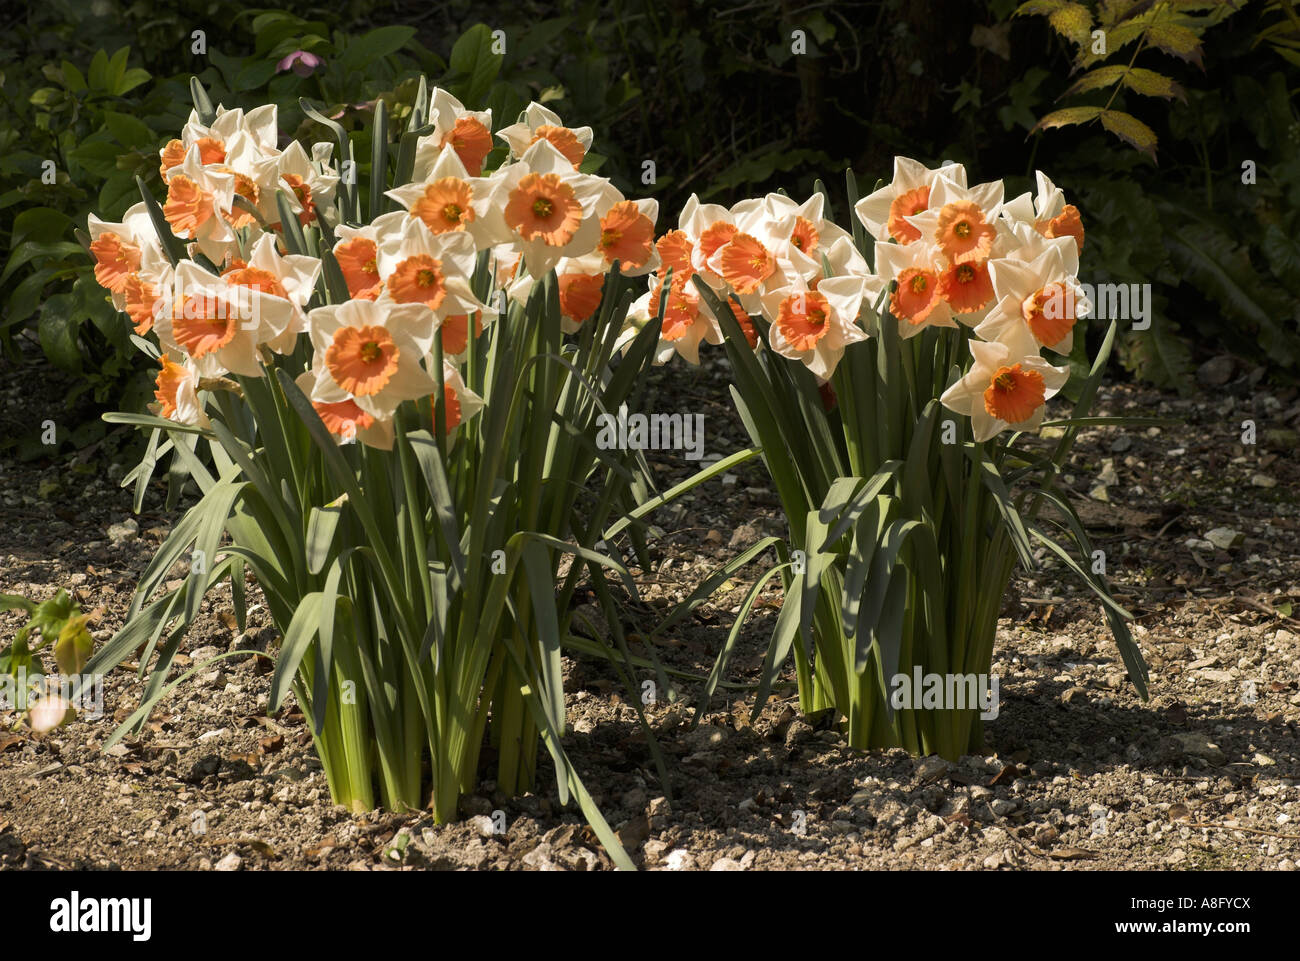 Daffodils / Narcissus. Stock Photo